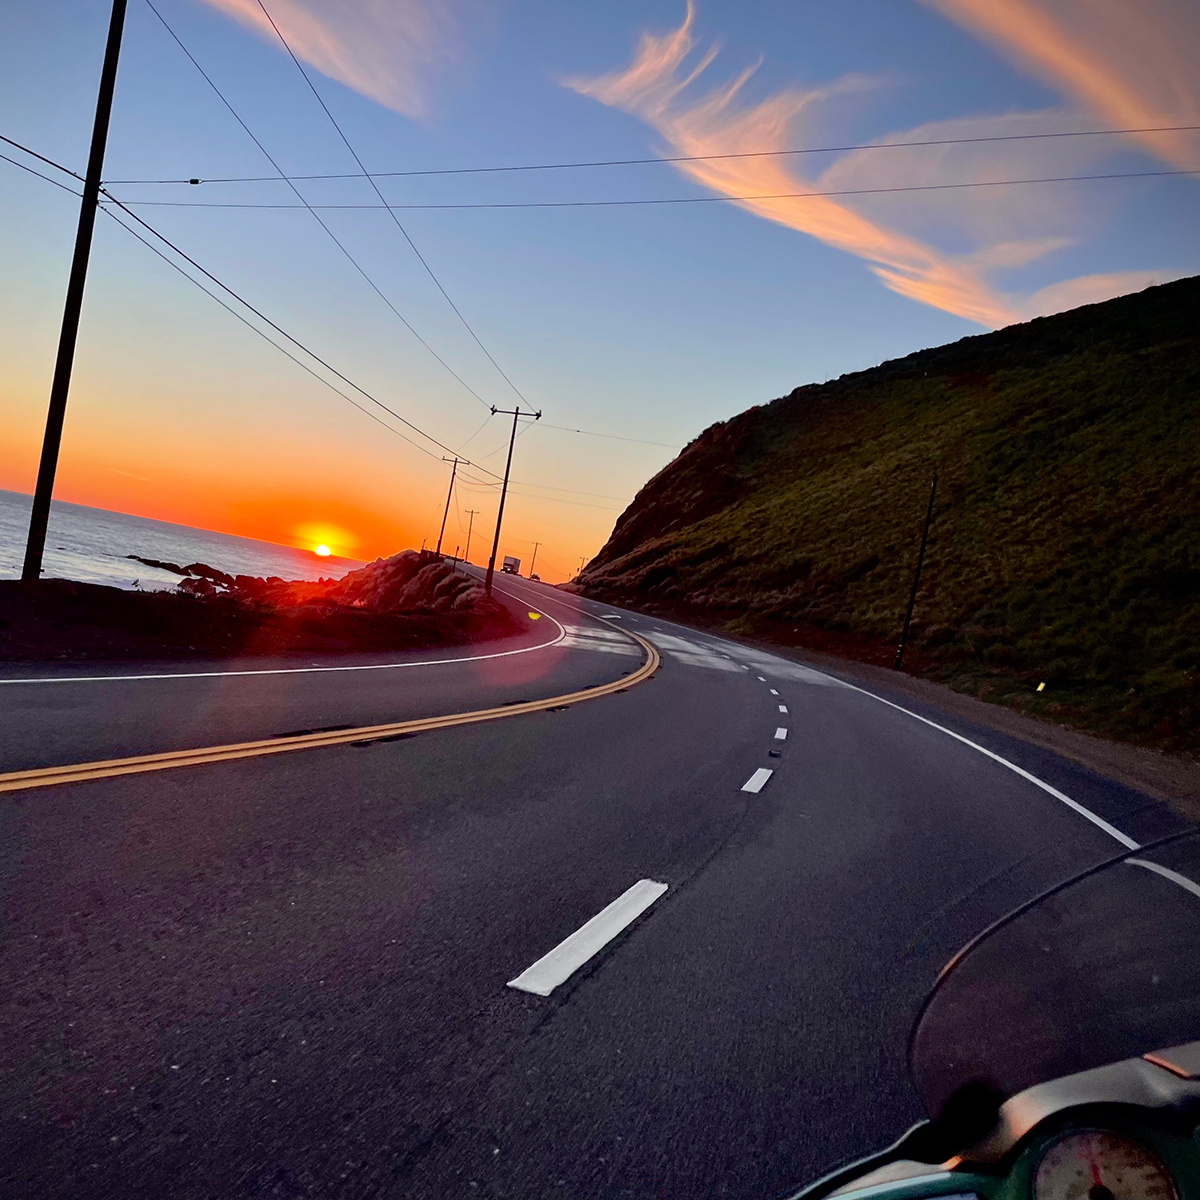 Riding a motorcycle along the California coast at sunset.